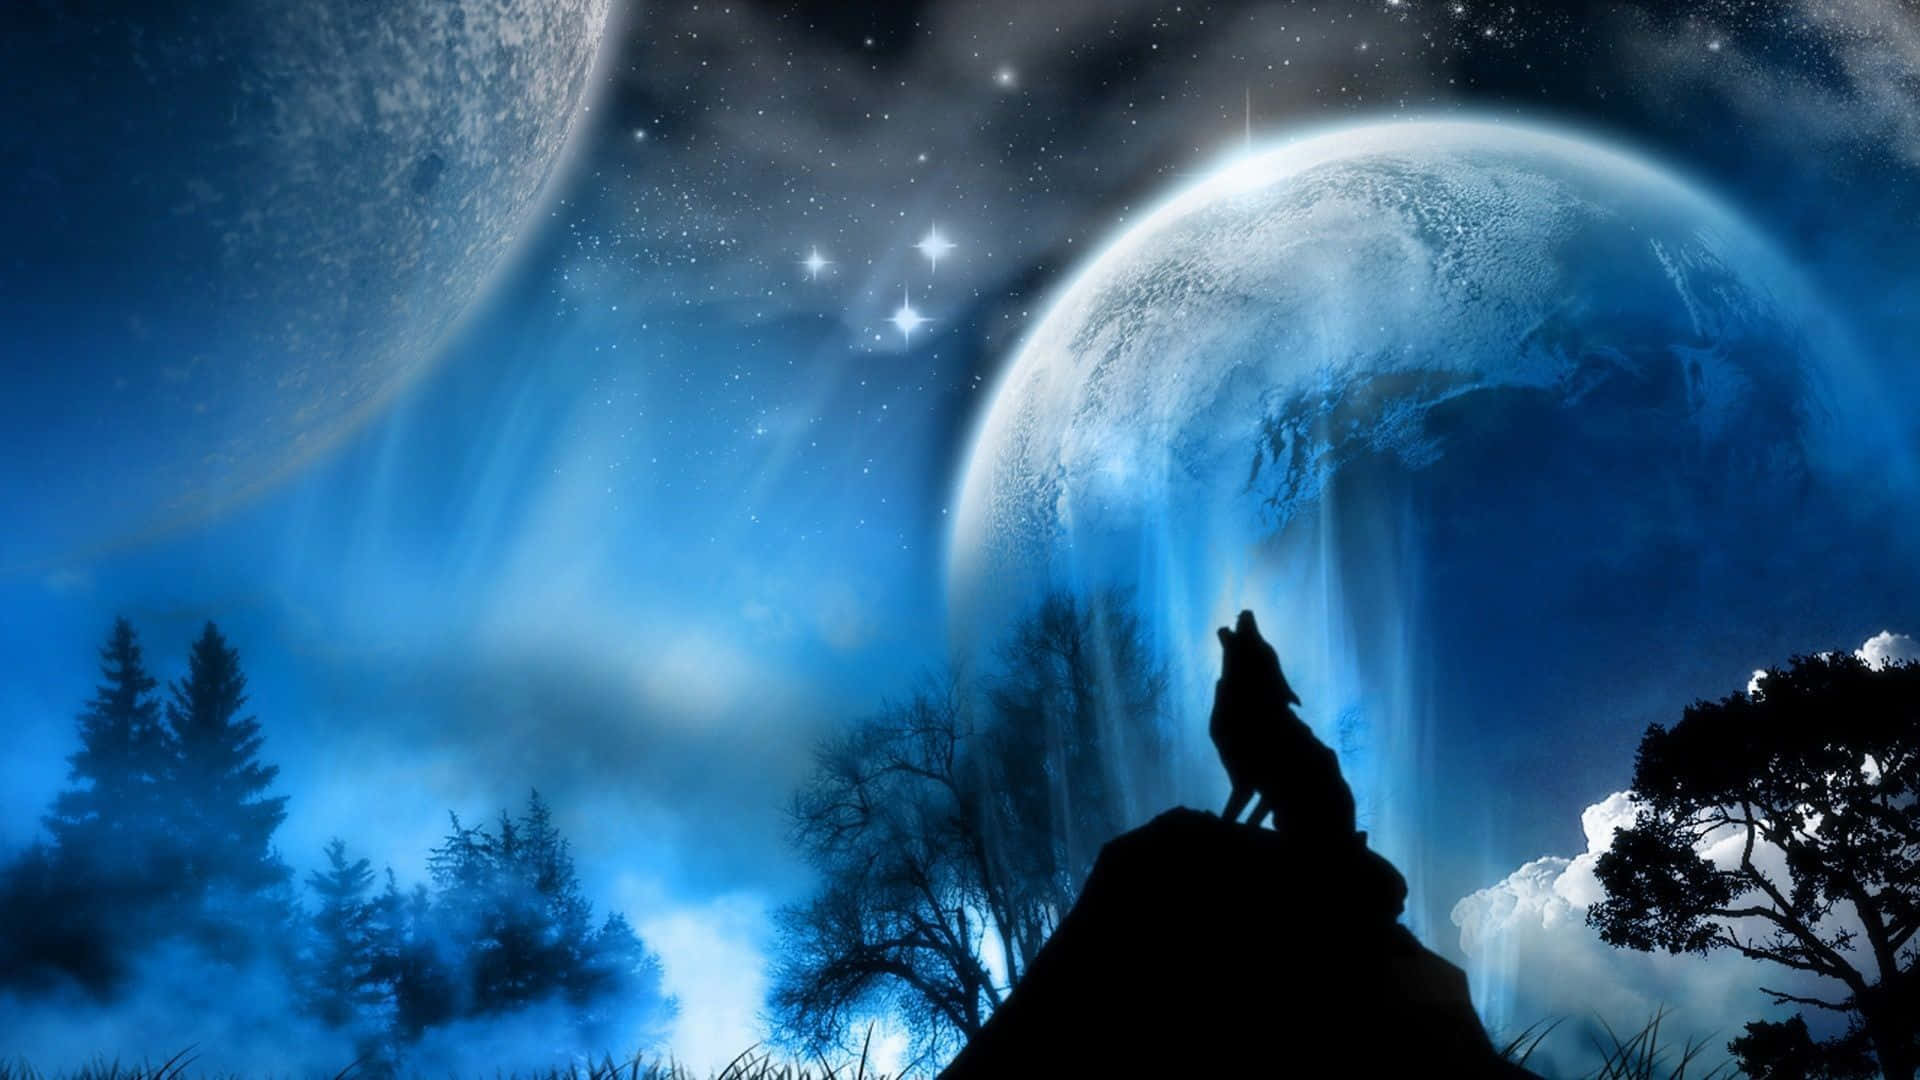 "A Lone Werewolf Roams Under the Night Sky"